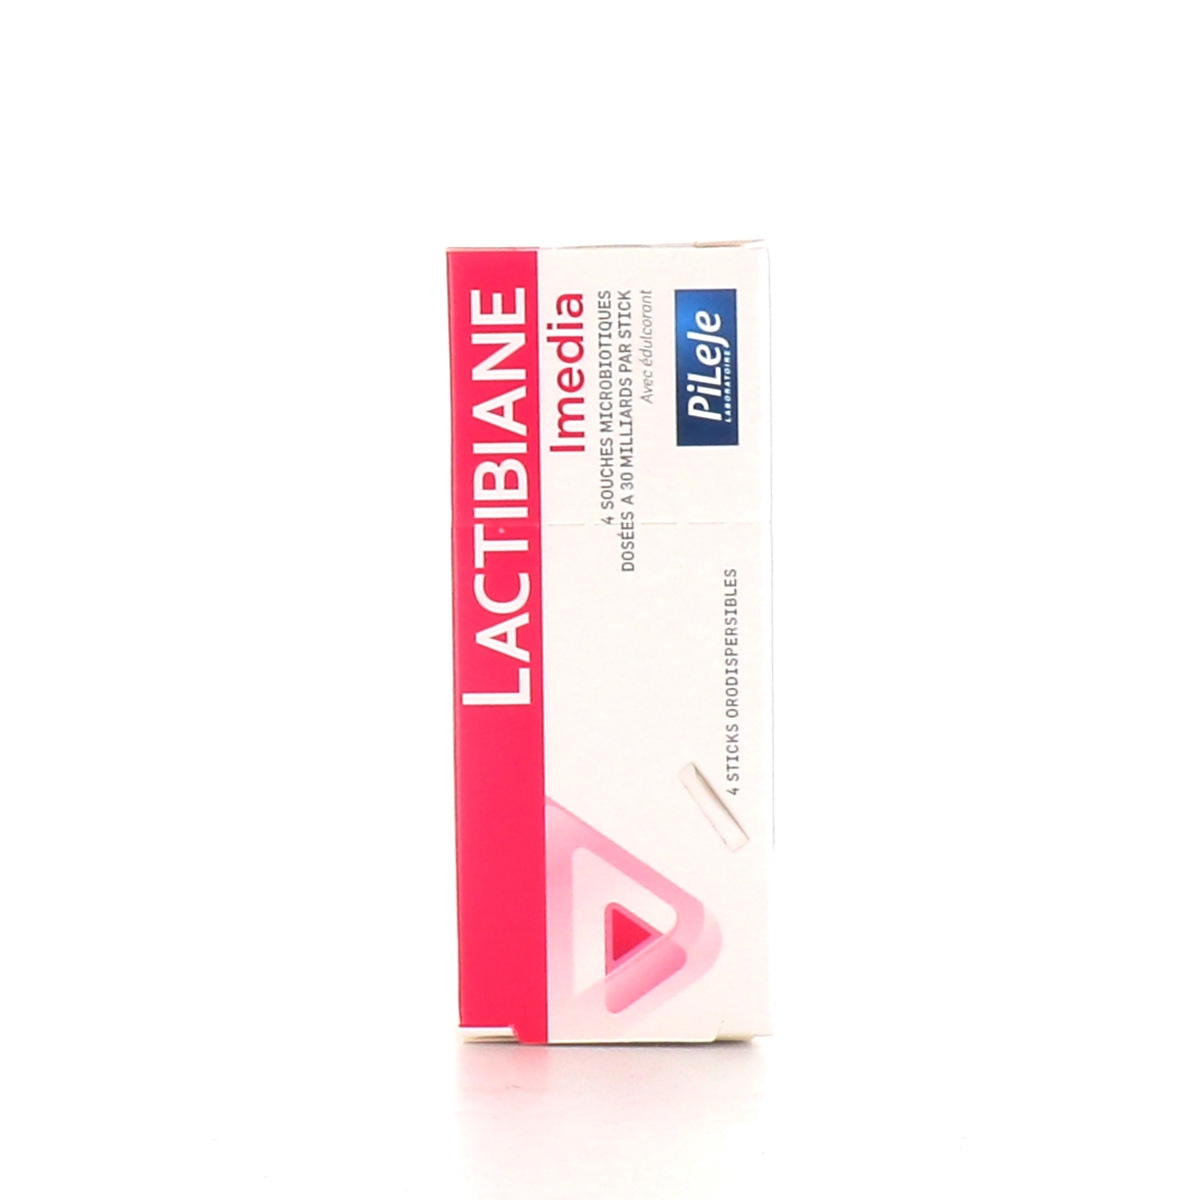 PiLeJe Lactibiane Tolérance - Pharmacie des Drakkars